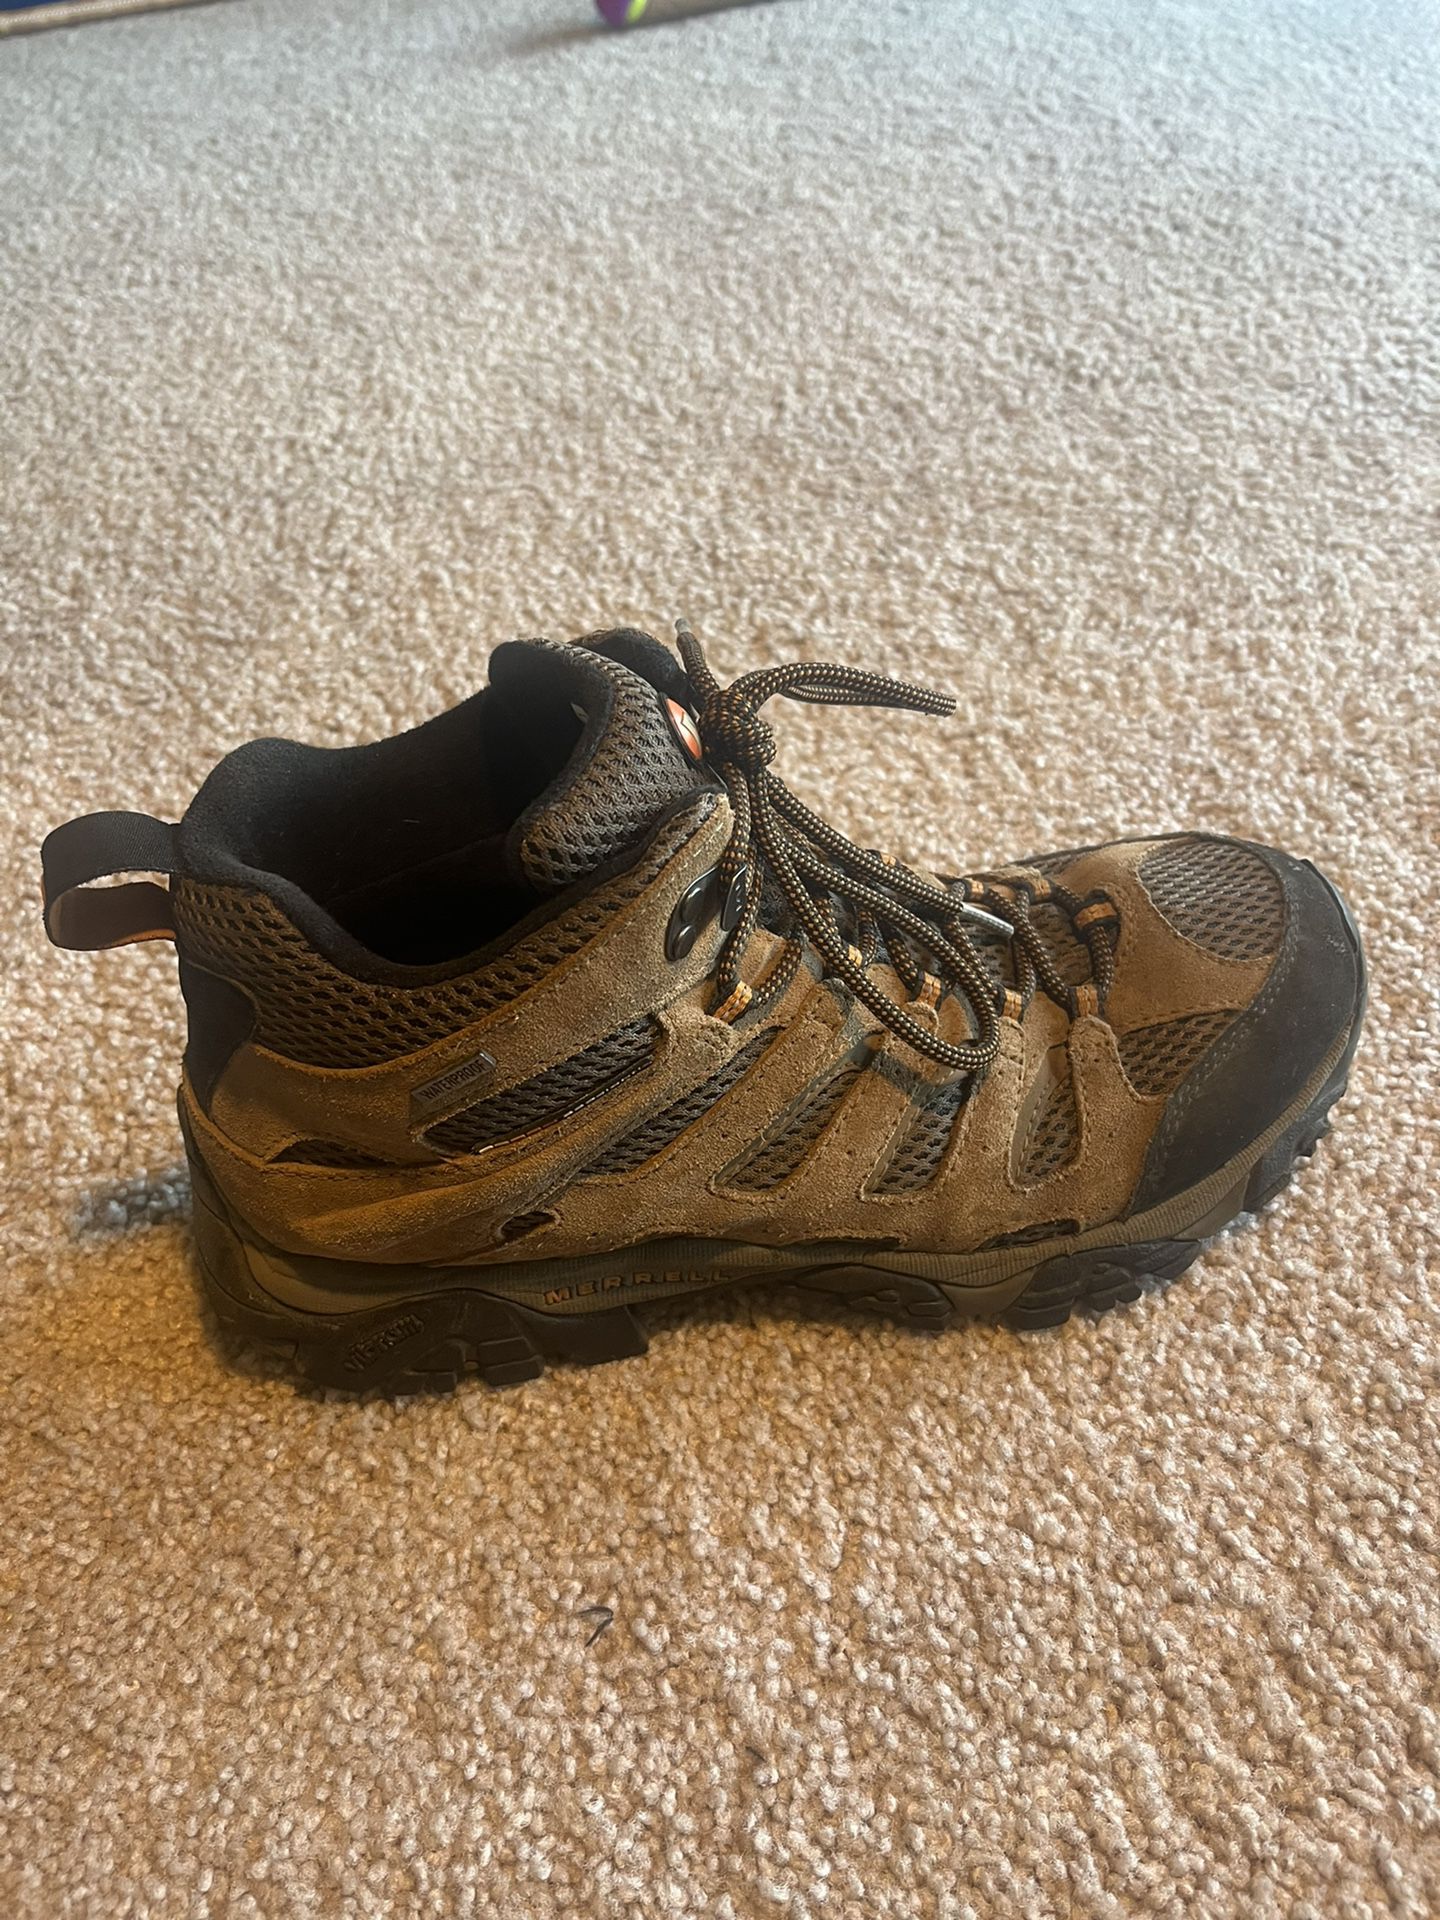 Merrell Moab Waterproof Hiking Boots 9.5